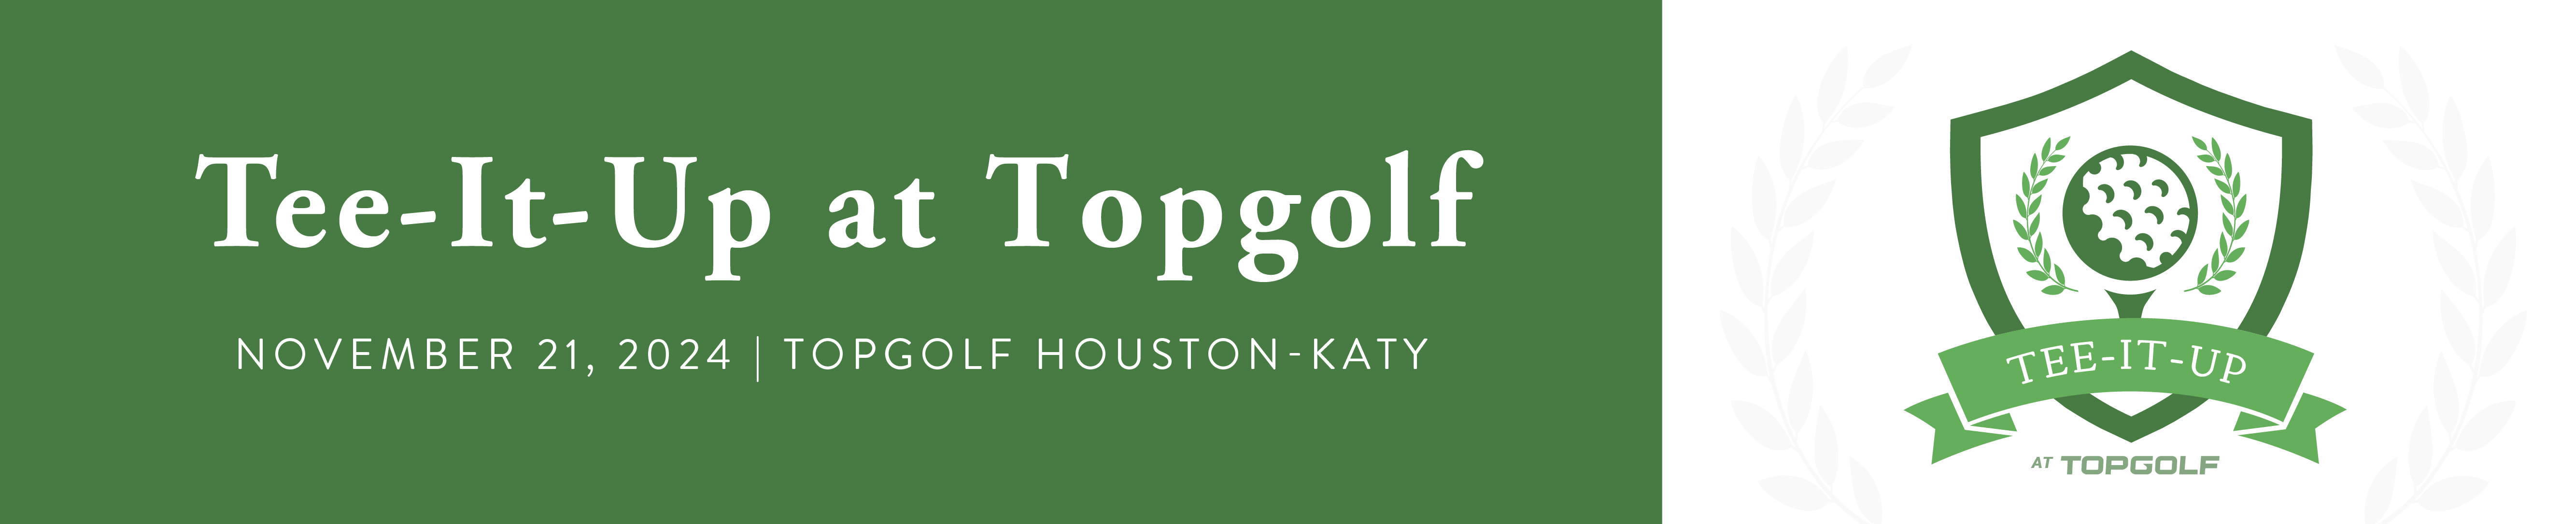 Tee-It-Up at Topgolf November 21, 2024 at Topgolf Houston-Katy